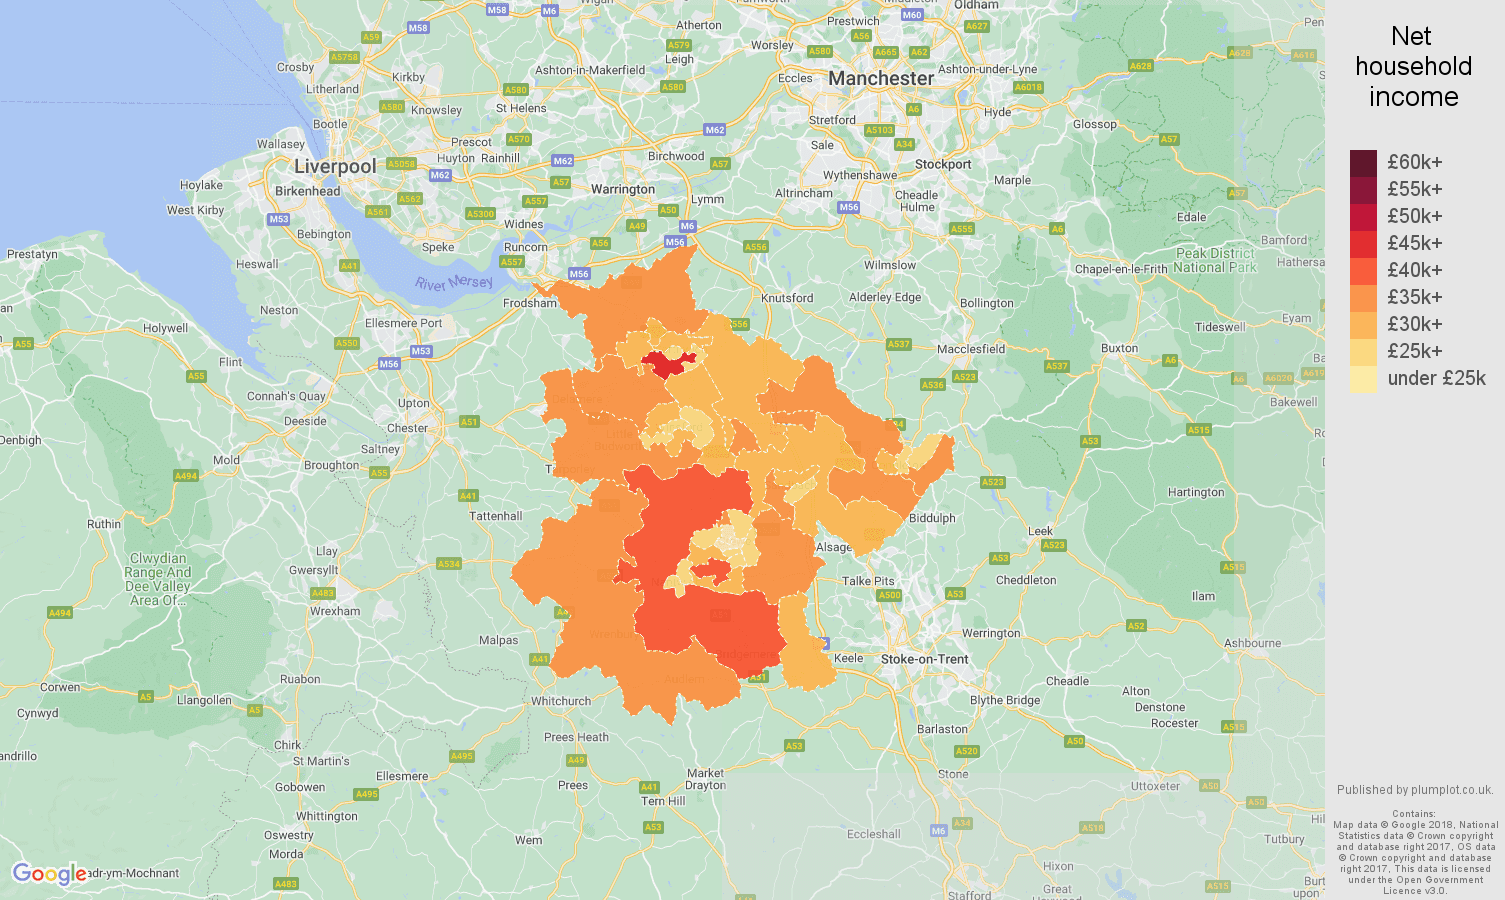 Crewe net household income map